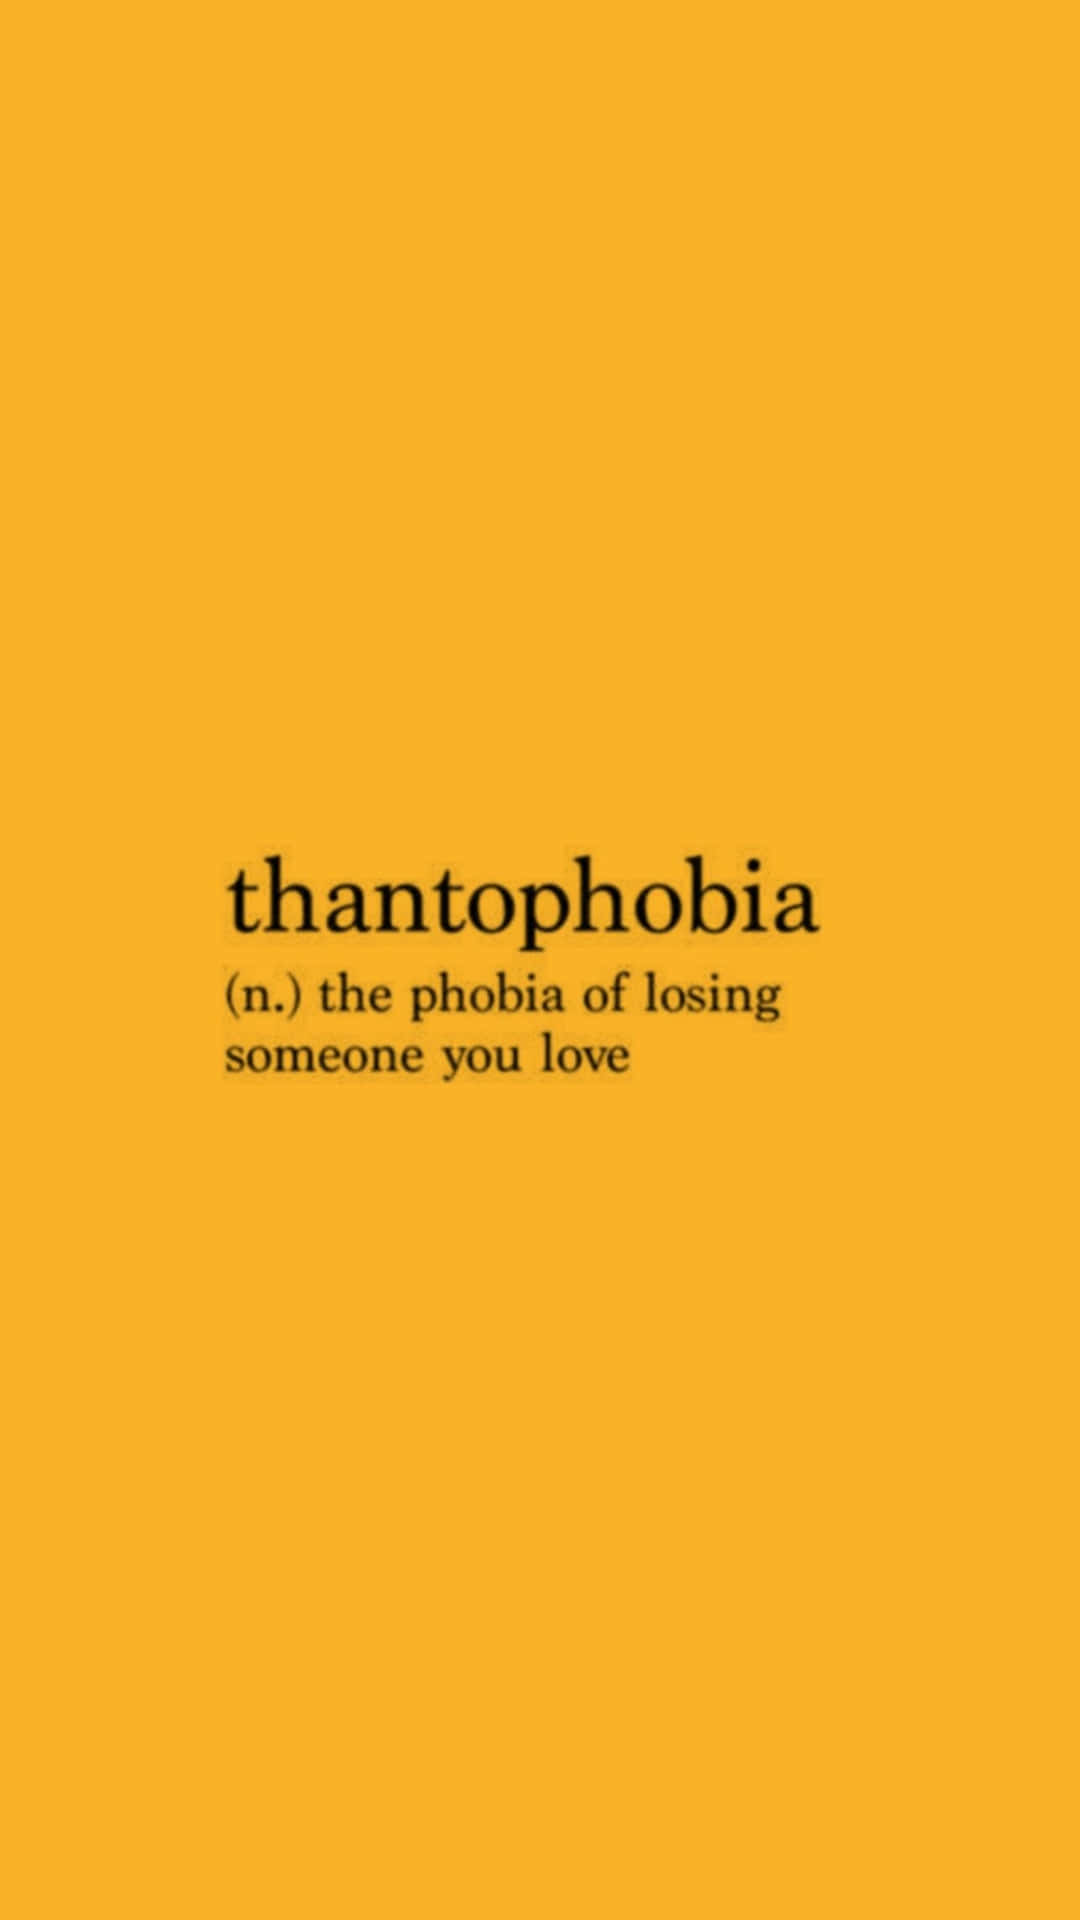 Thatopia Go The Phobic Of Loving Someone You Love Wallpaper